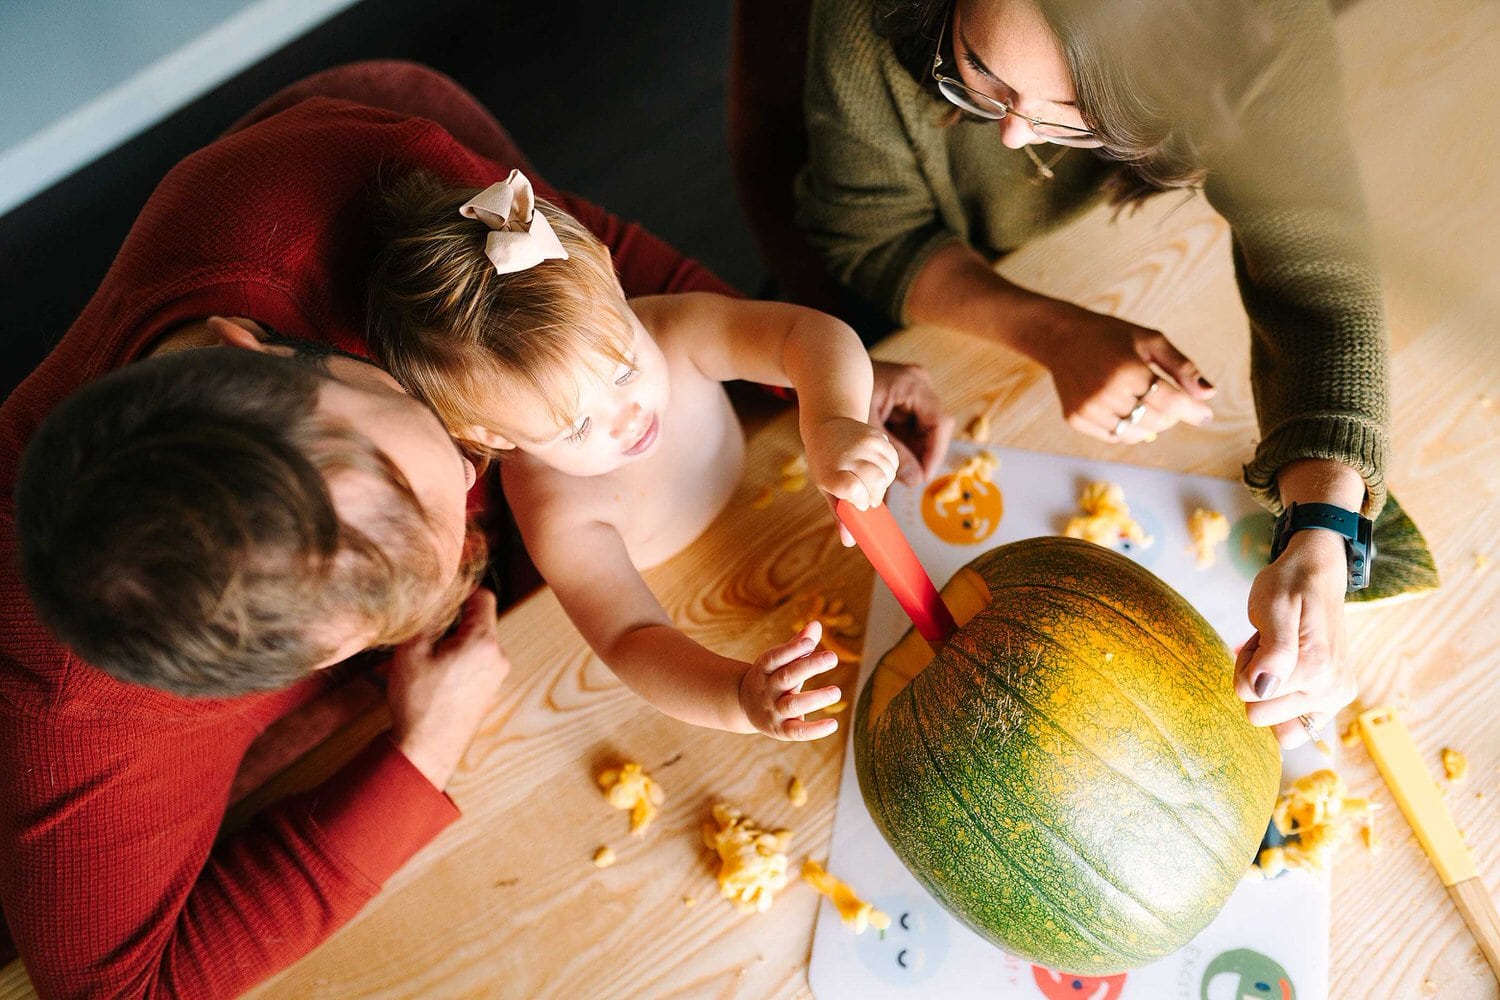 A little girl scoops seeds out of a pumpkin